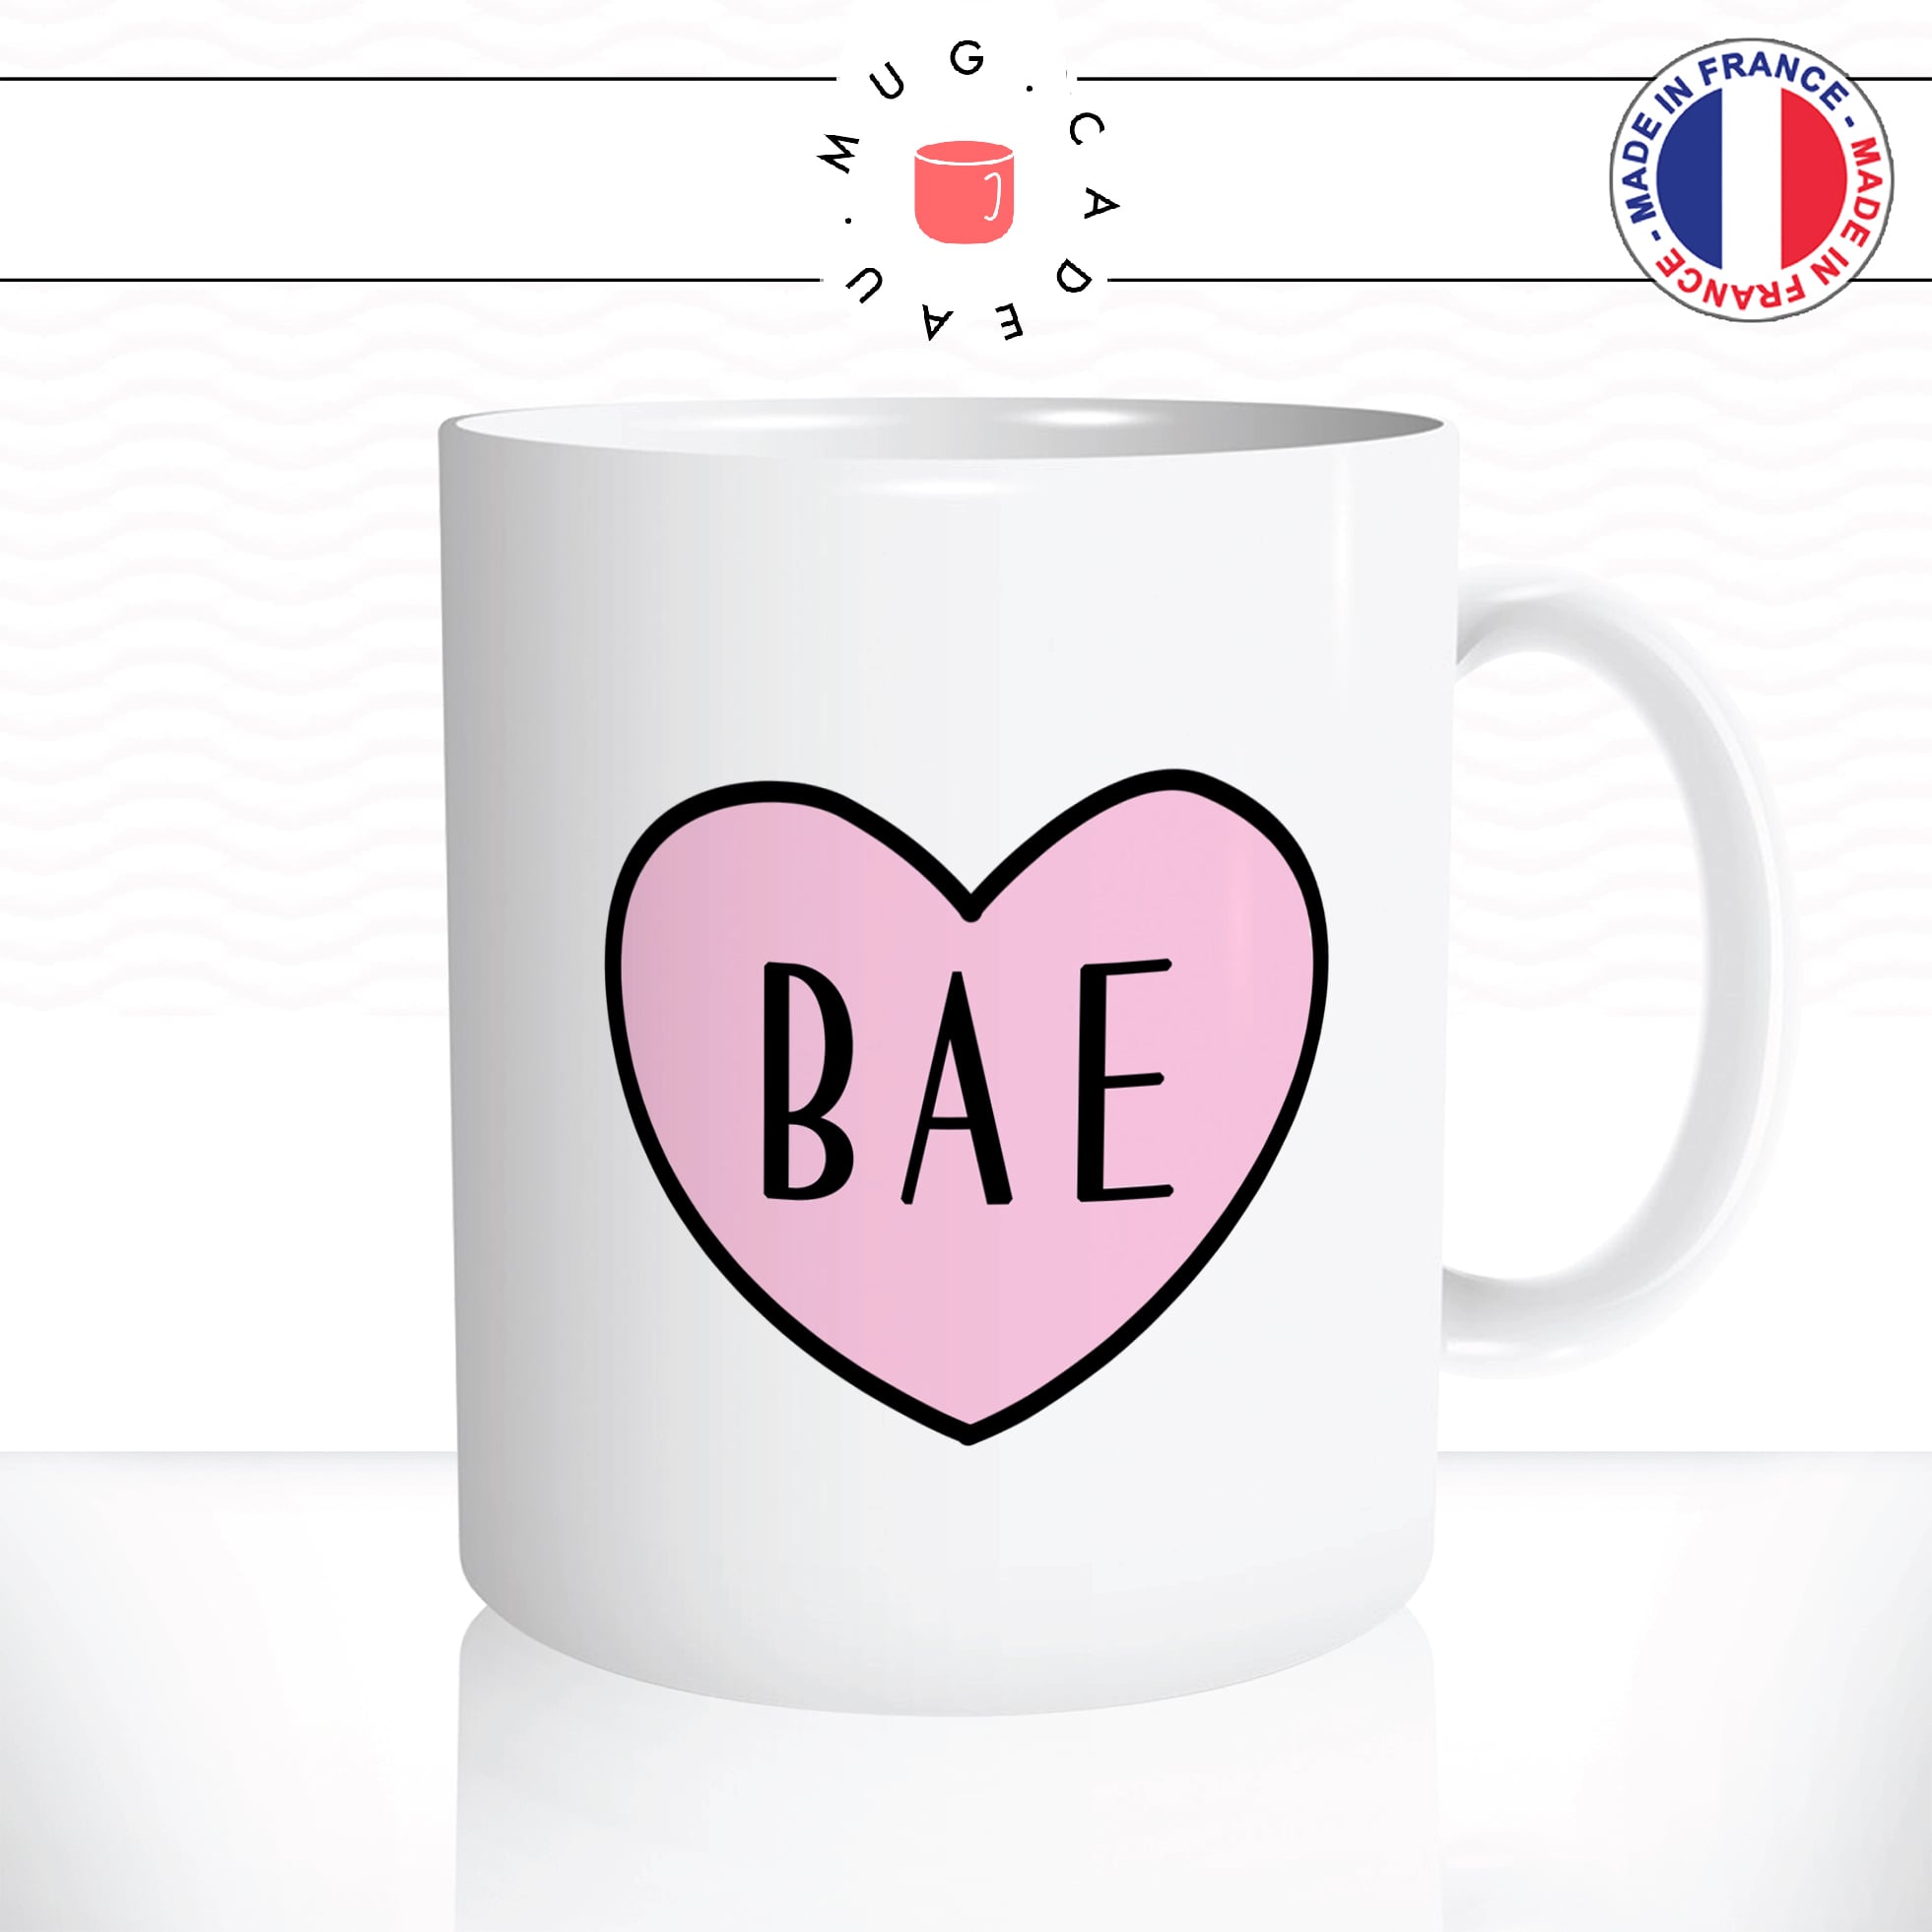 mug-tasse-bae-coeur-rose-mignon-couple-amour-amoureux-femme-homme-idee-cadeau-original-1